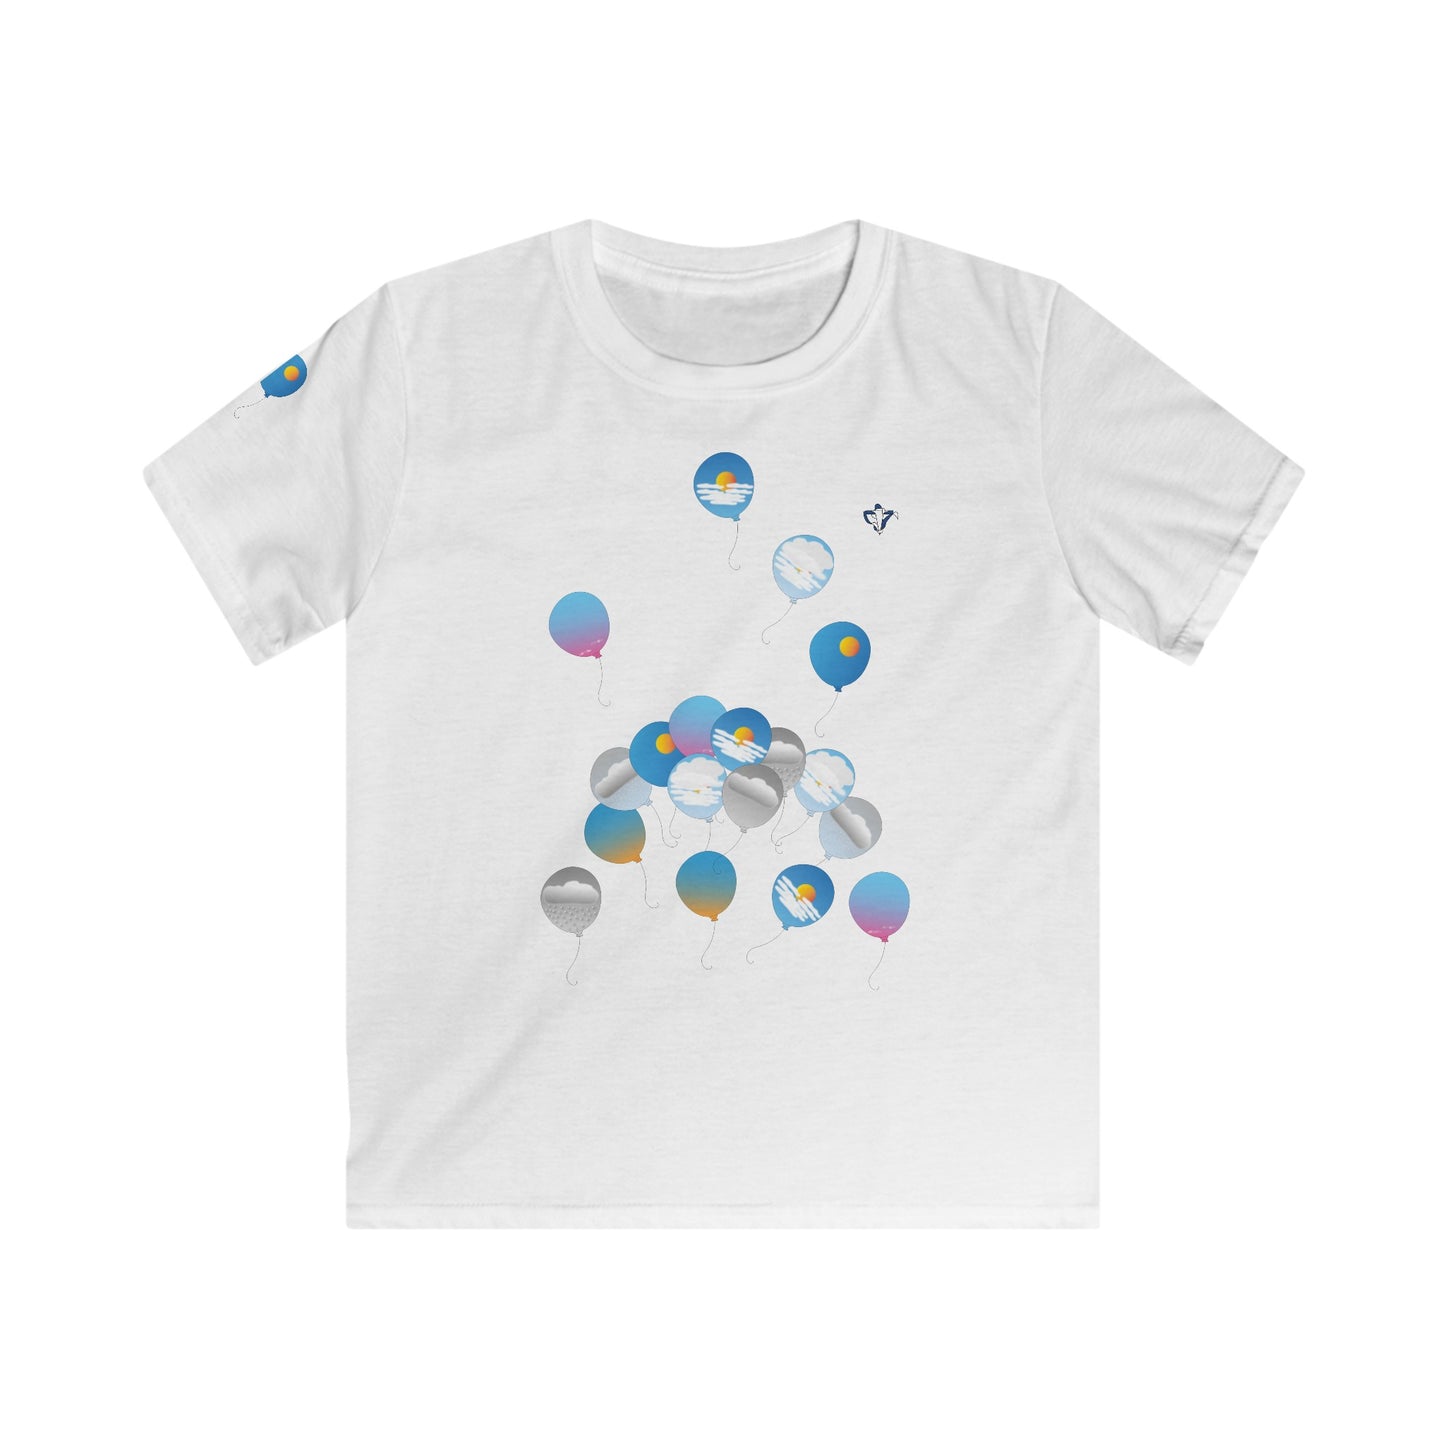 Tee-shirt enfant Ballons ciel (à personnaliser)